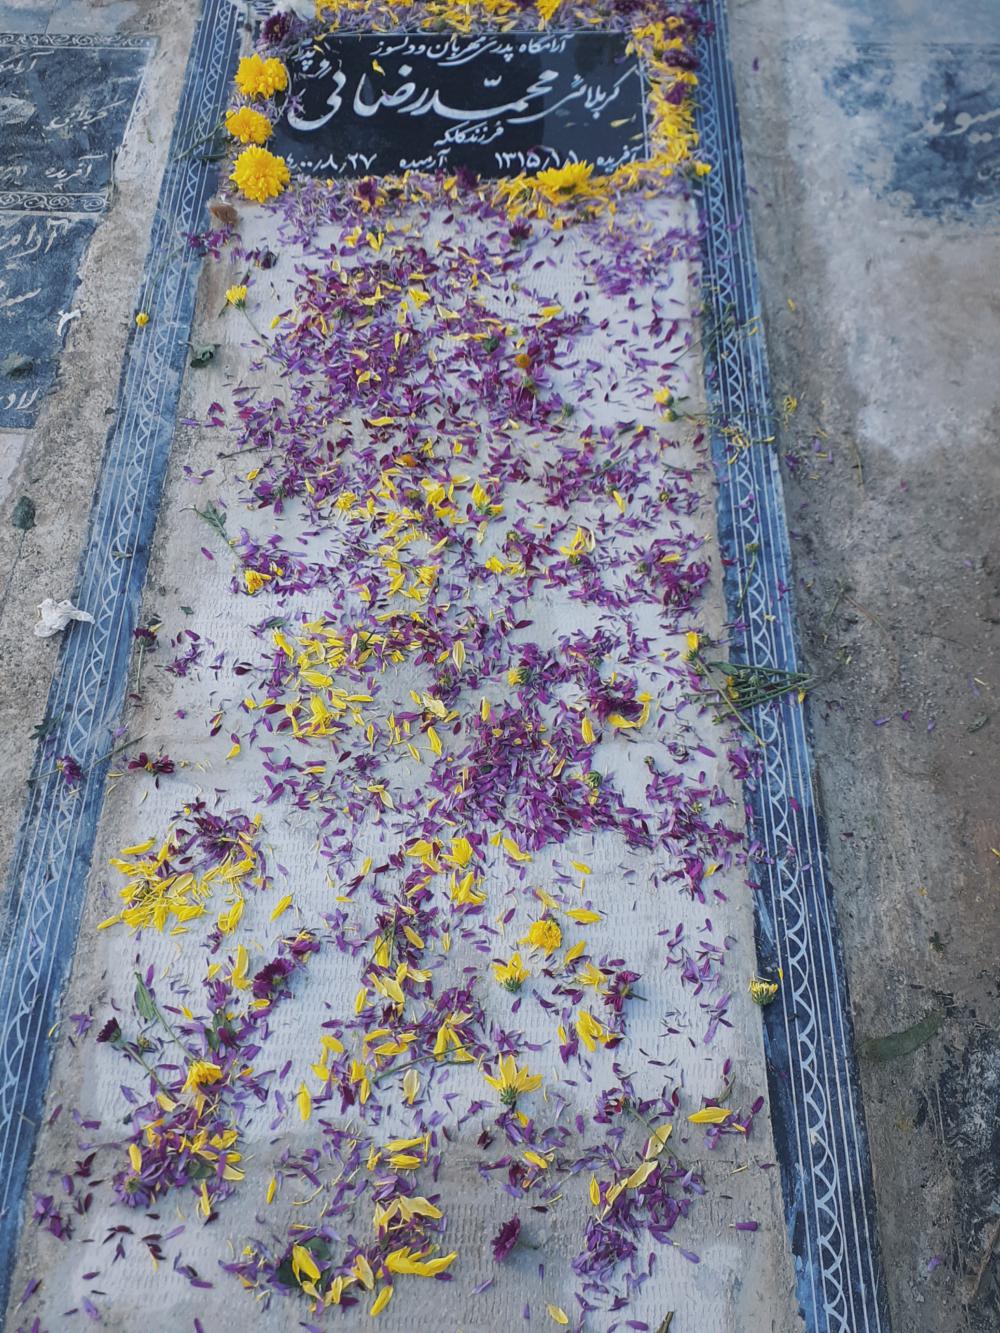 یادبود شادروان کربلایے محمد رضایی